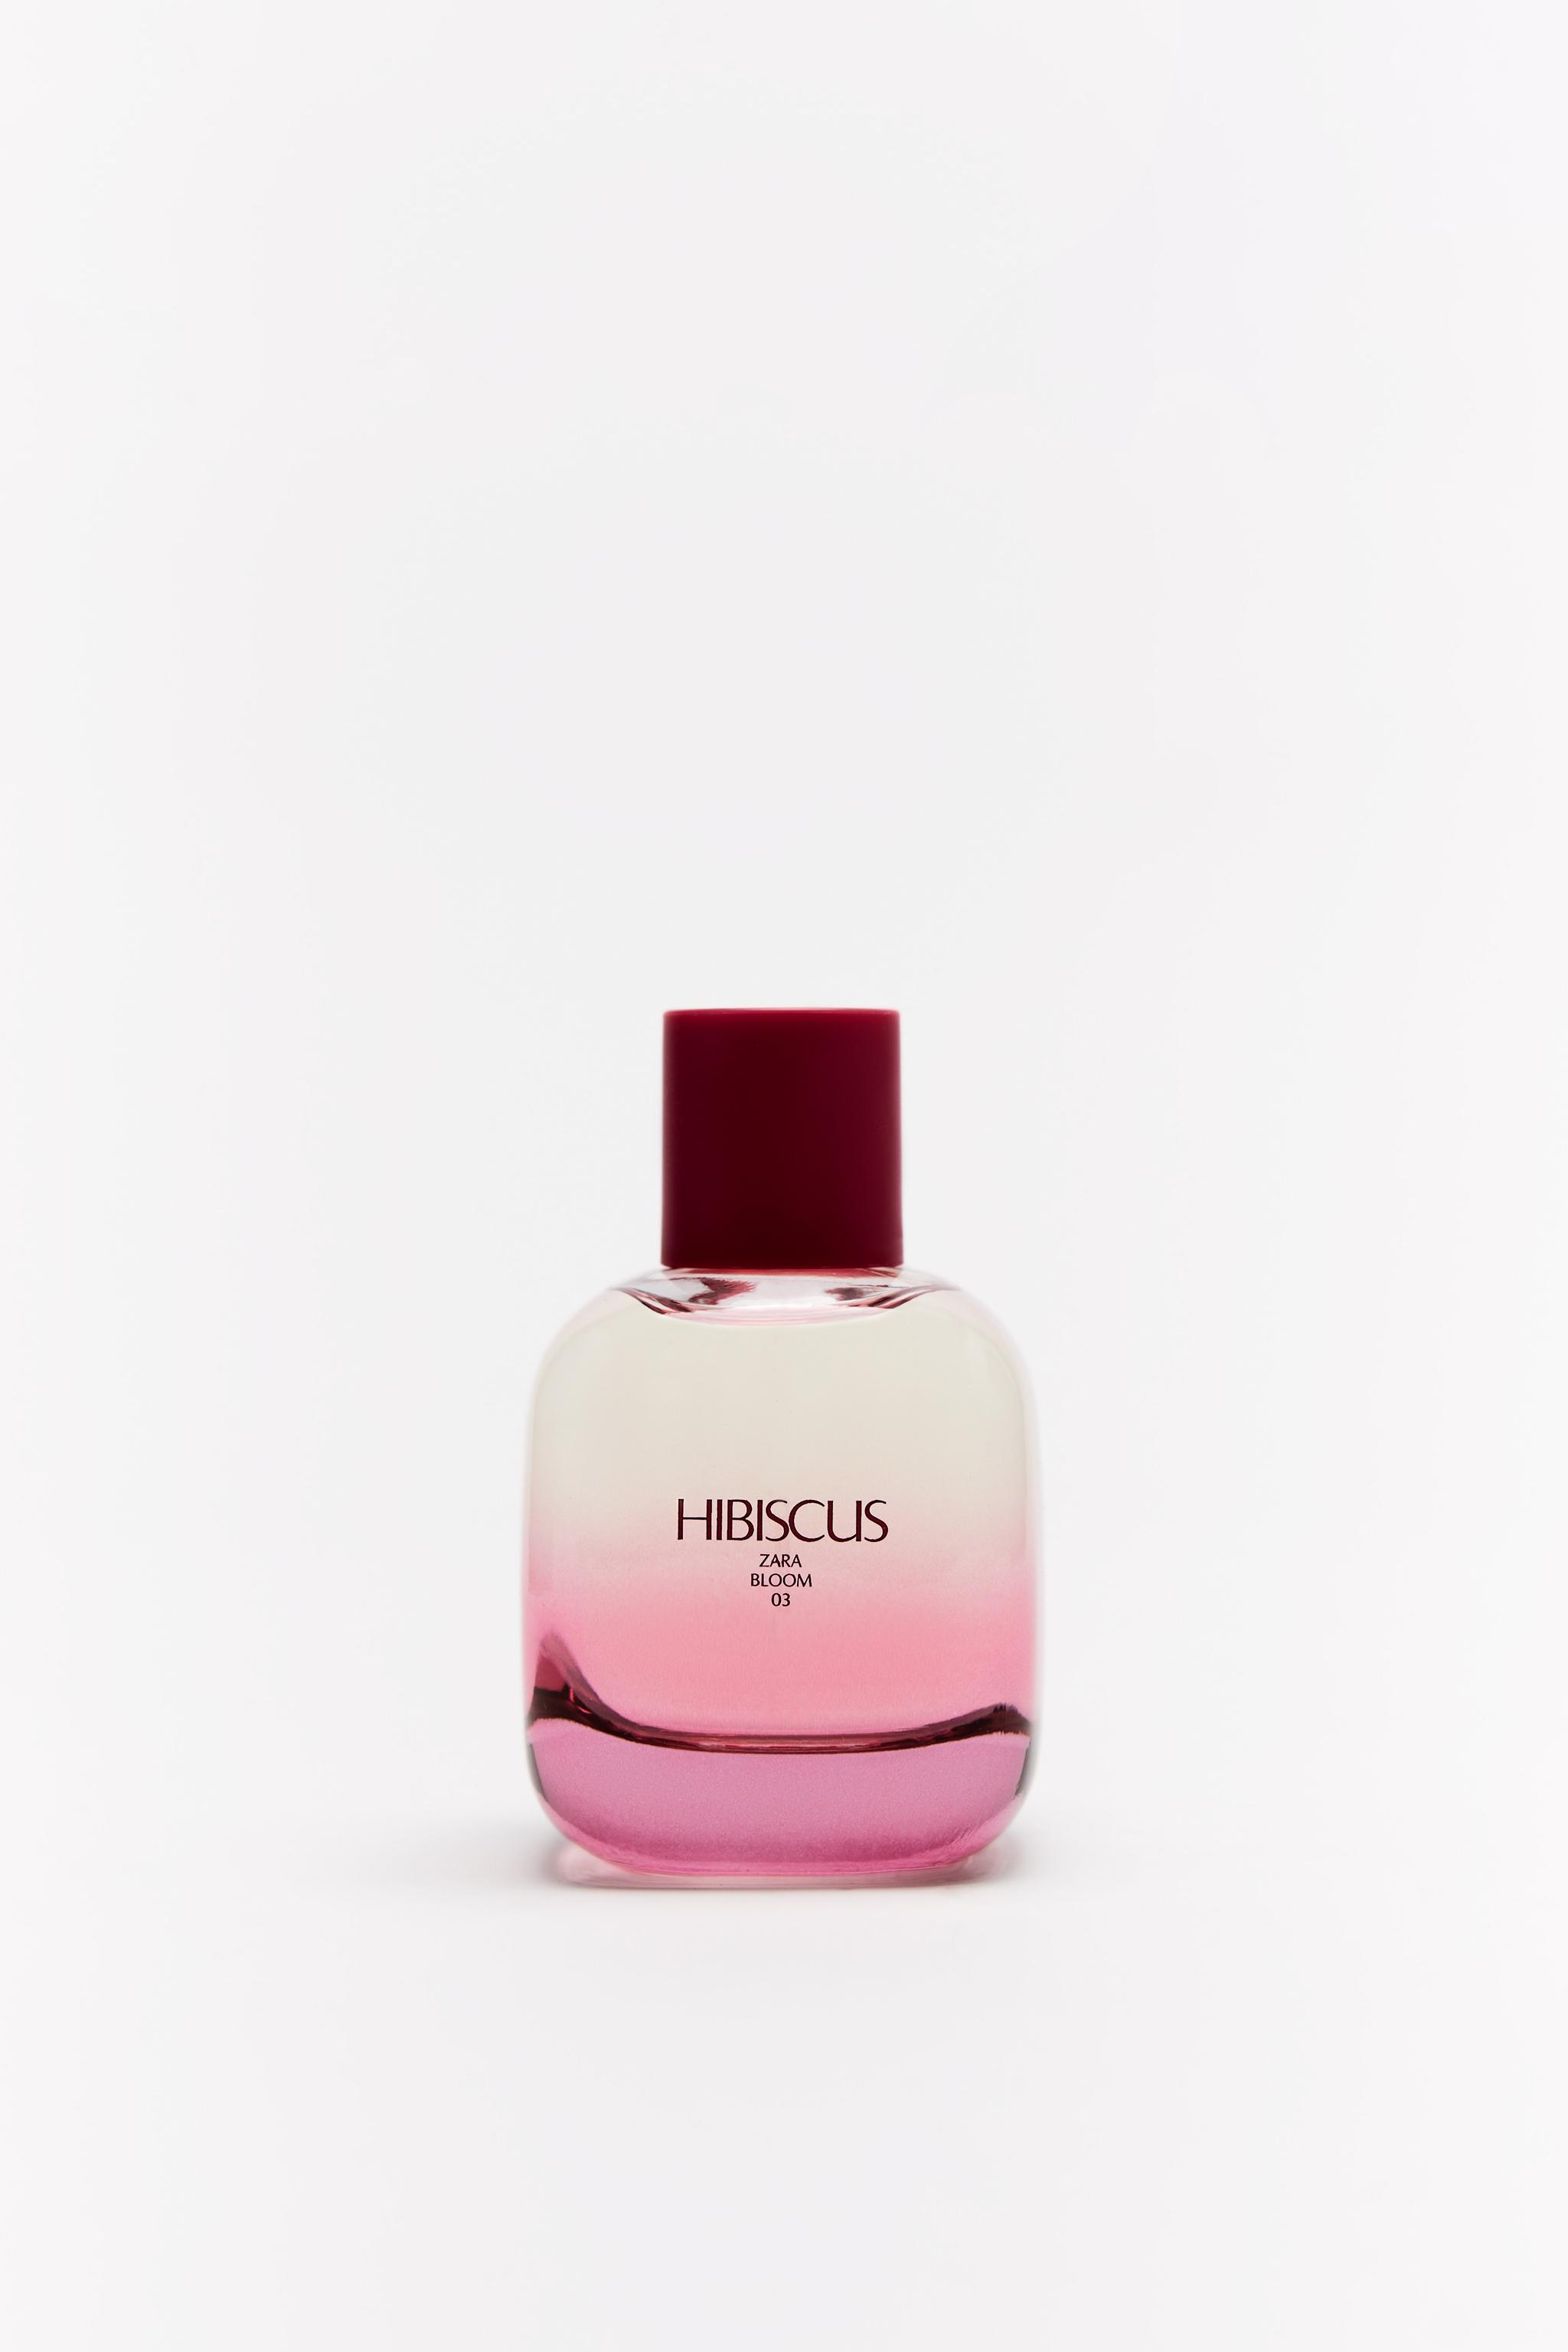 Zara Pink Flambé Women Eau De Toilette Fragrance 90 ml 3.0 Oz New Sealed